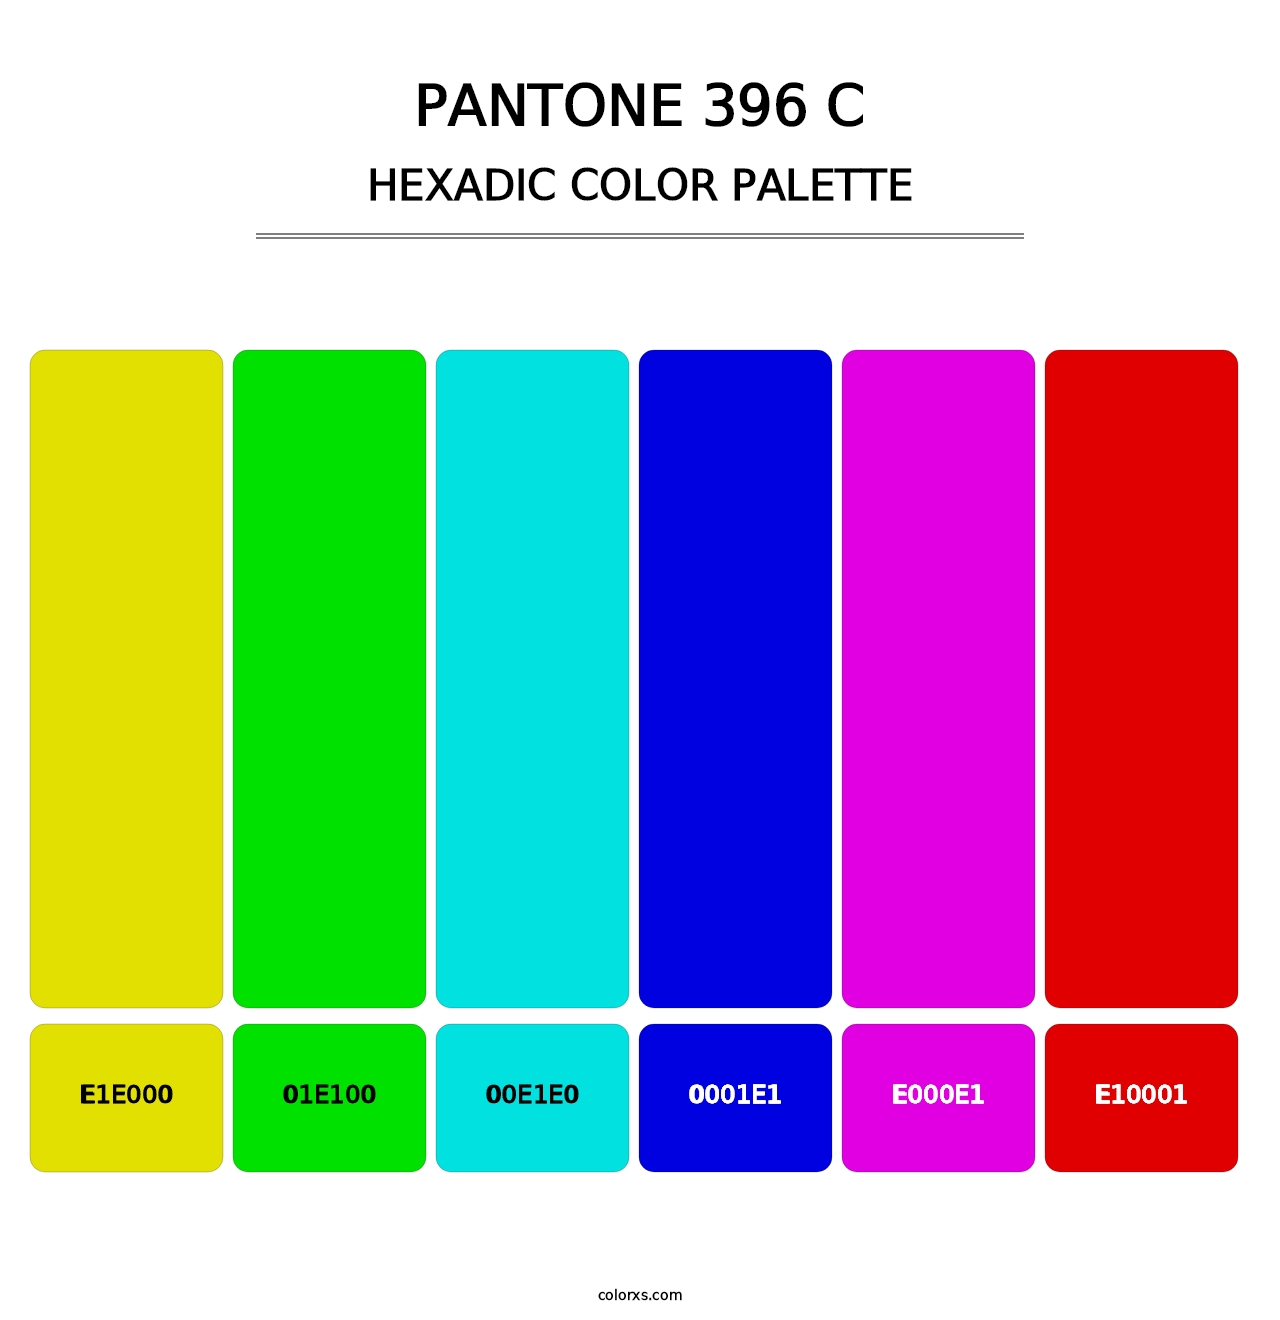 PANTONE 396 C - Hexadic Color Palette